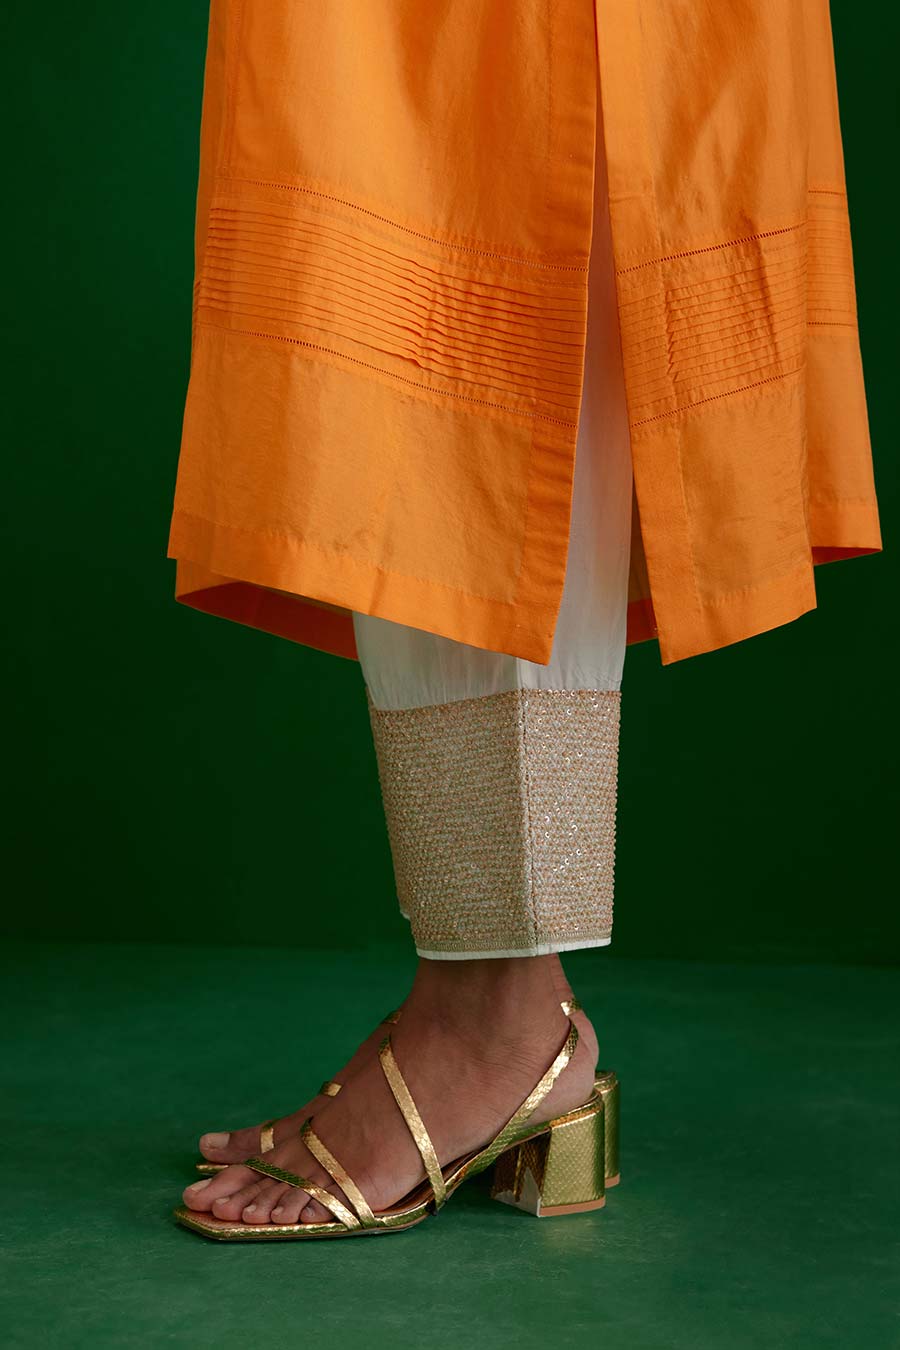 Marigold Silk Embroidered Kurta & Pant Set